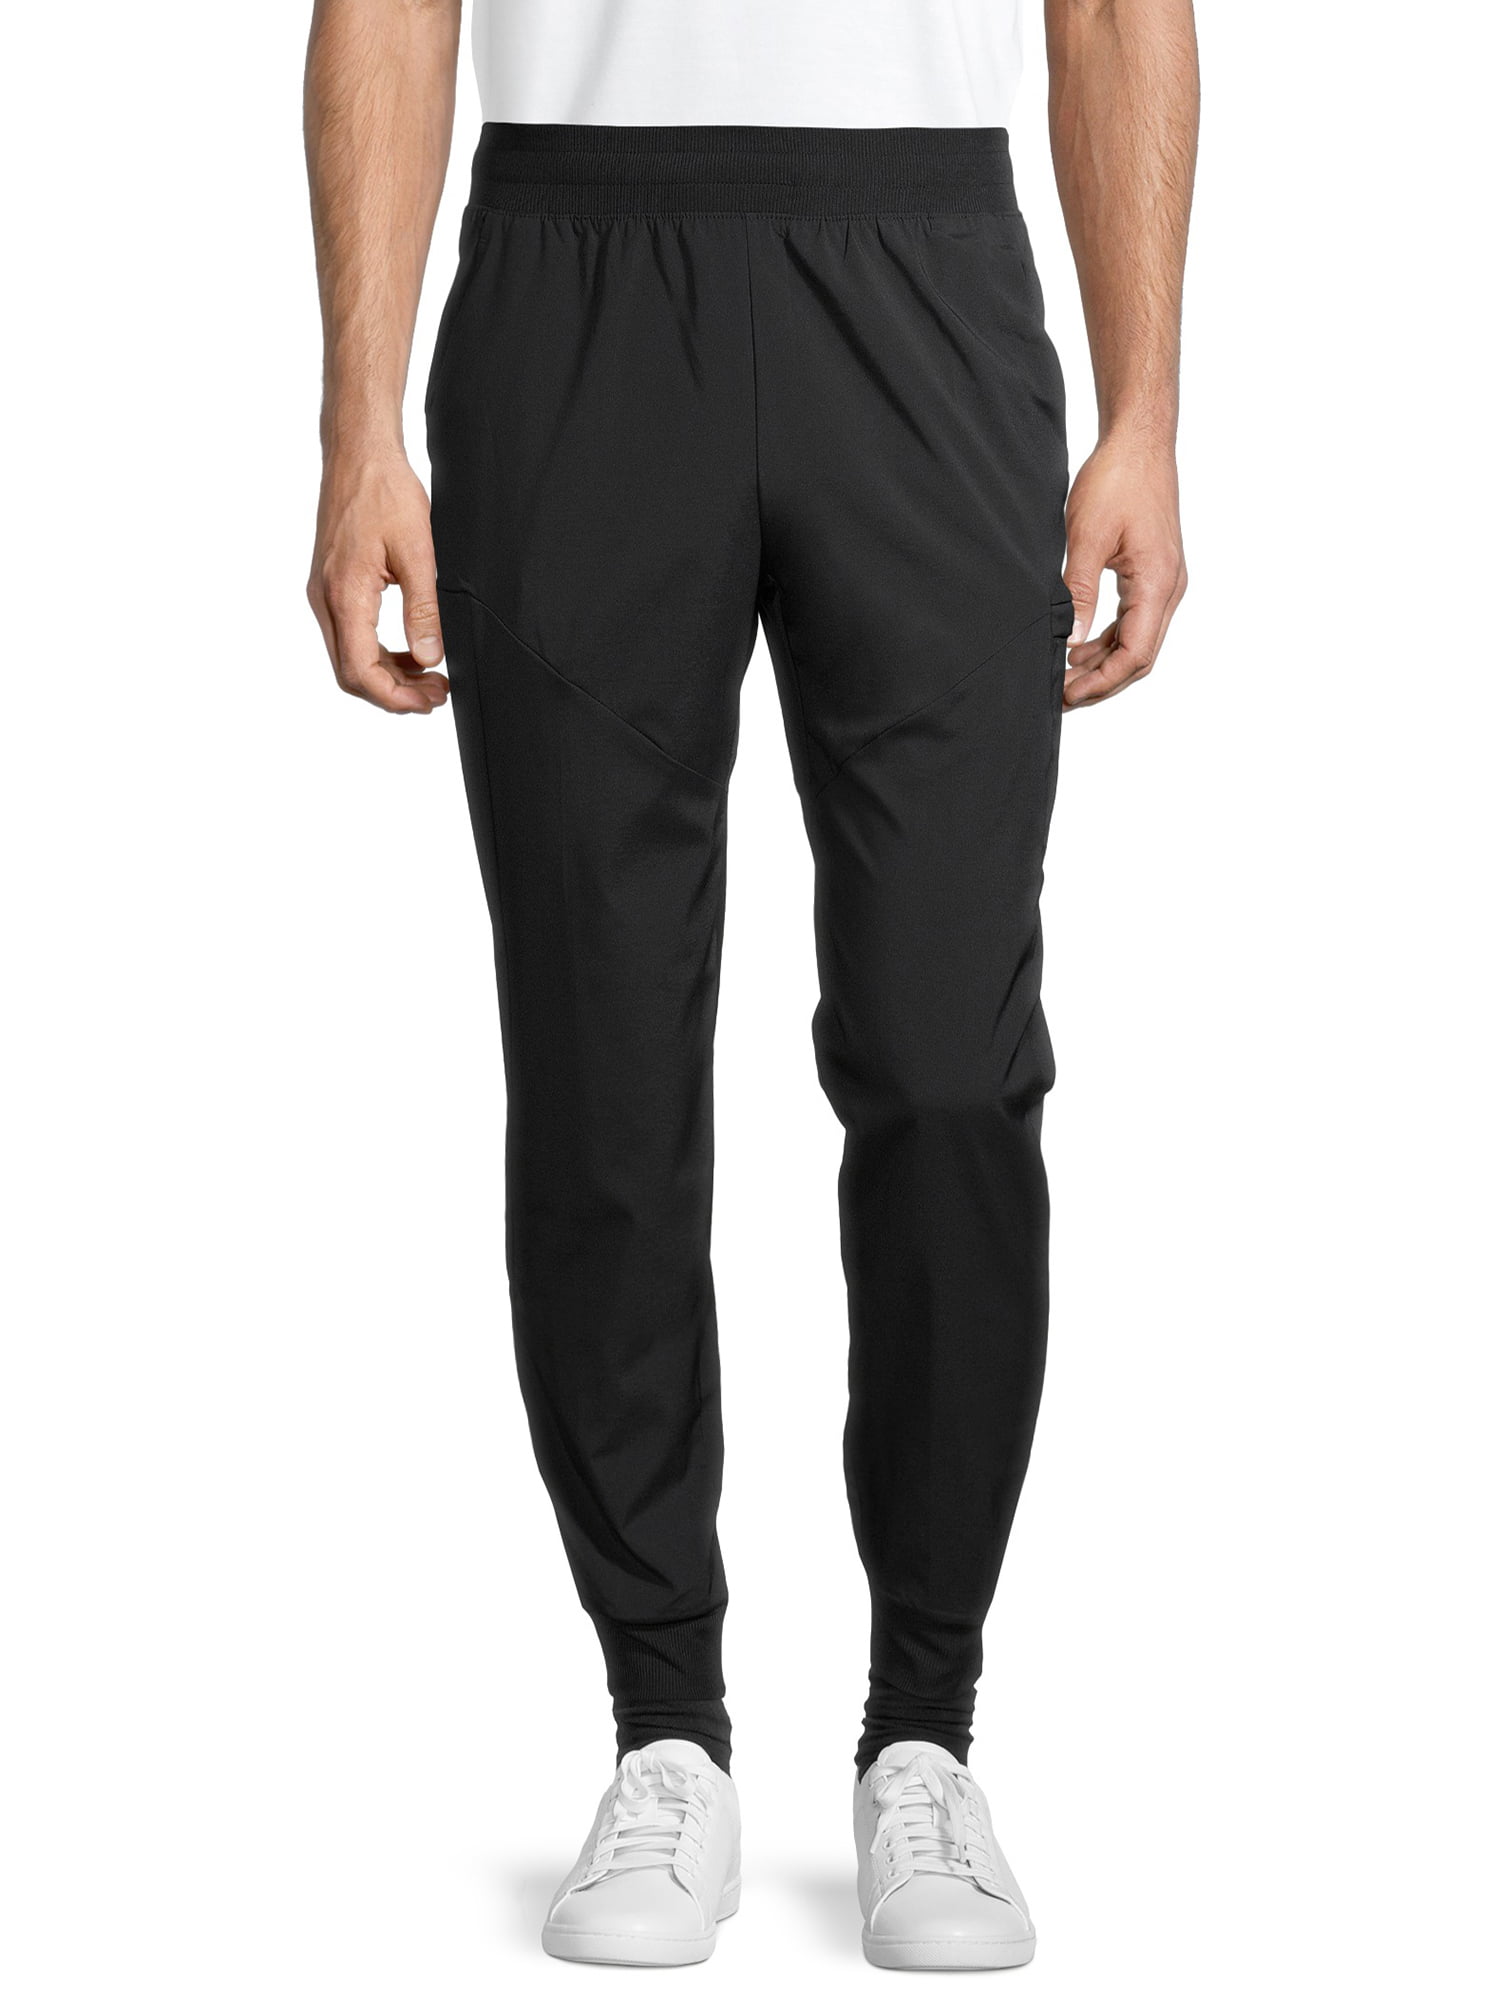 Apana - Apana Men's Woven Stretch Cargo Athletic Pants - Walmart.com ...